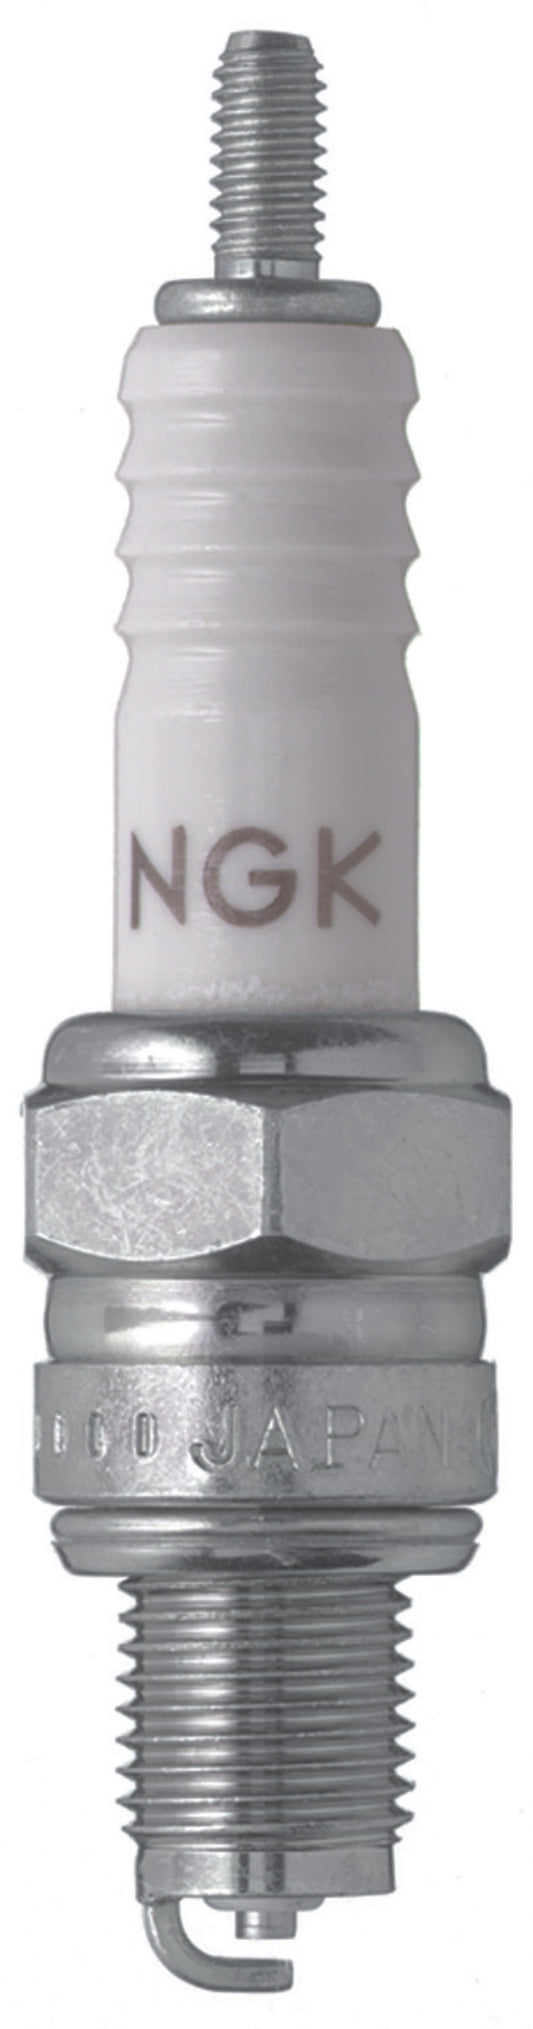 NGK Standard Spark Plug Box of 10 (C8HSA)